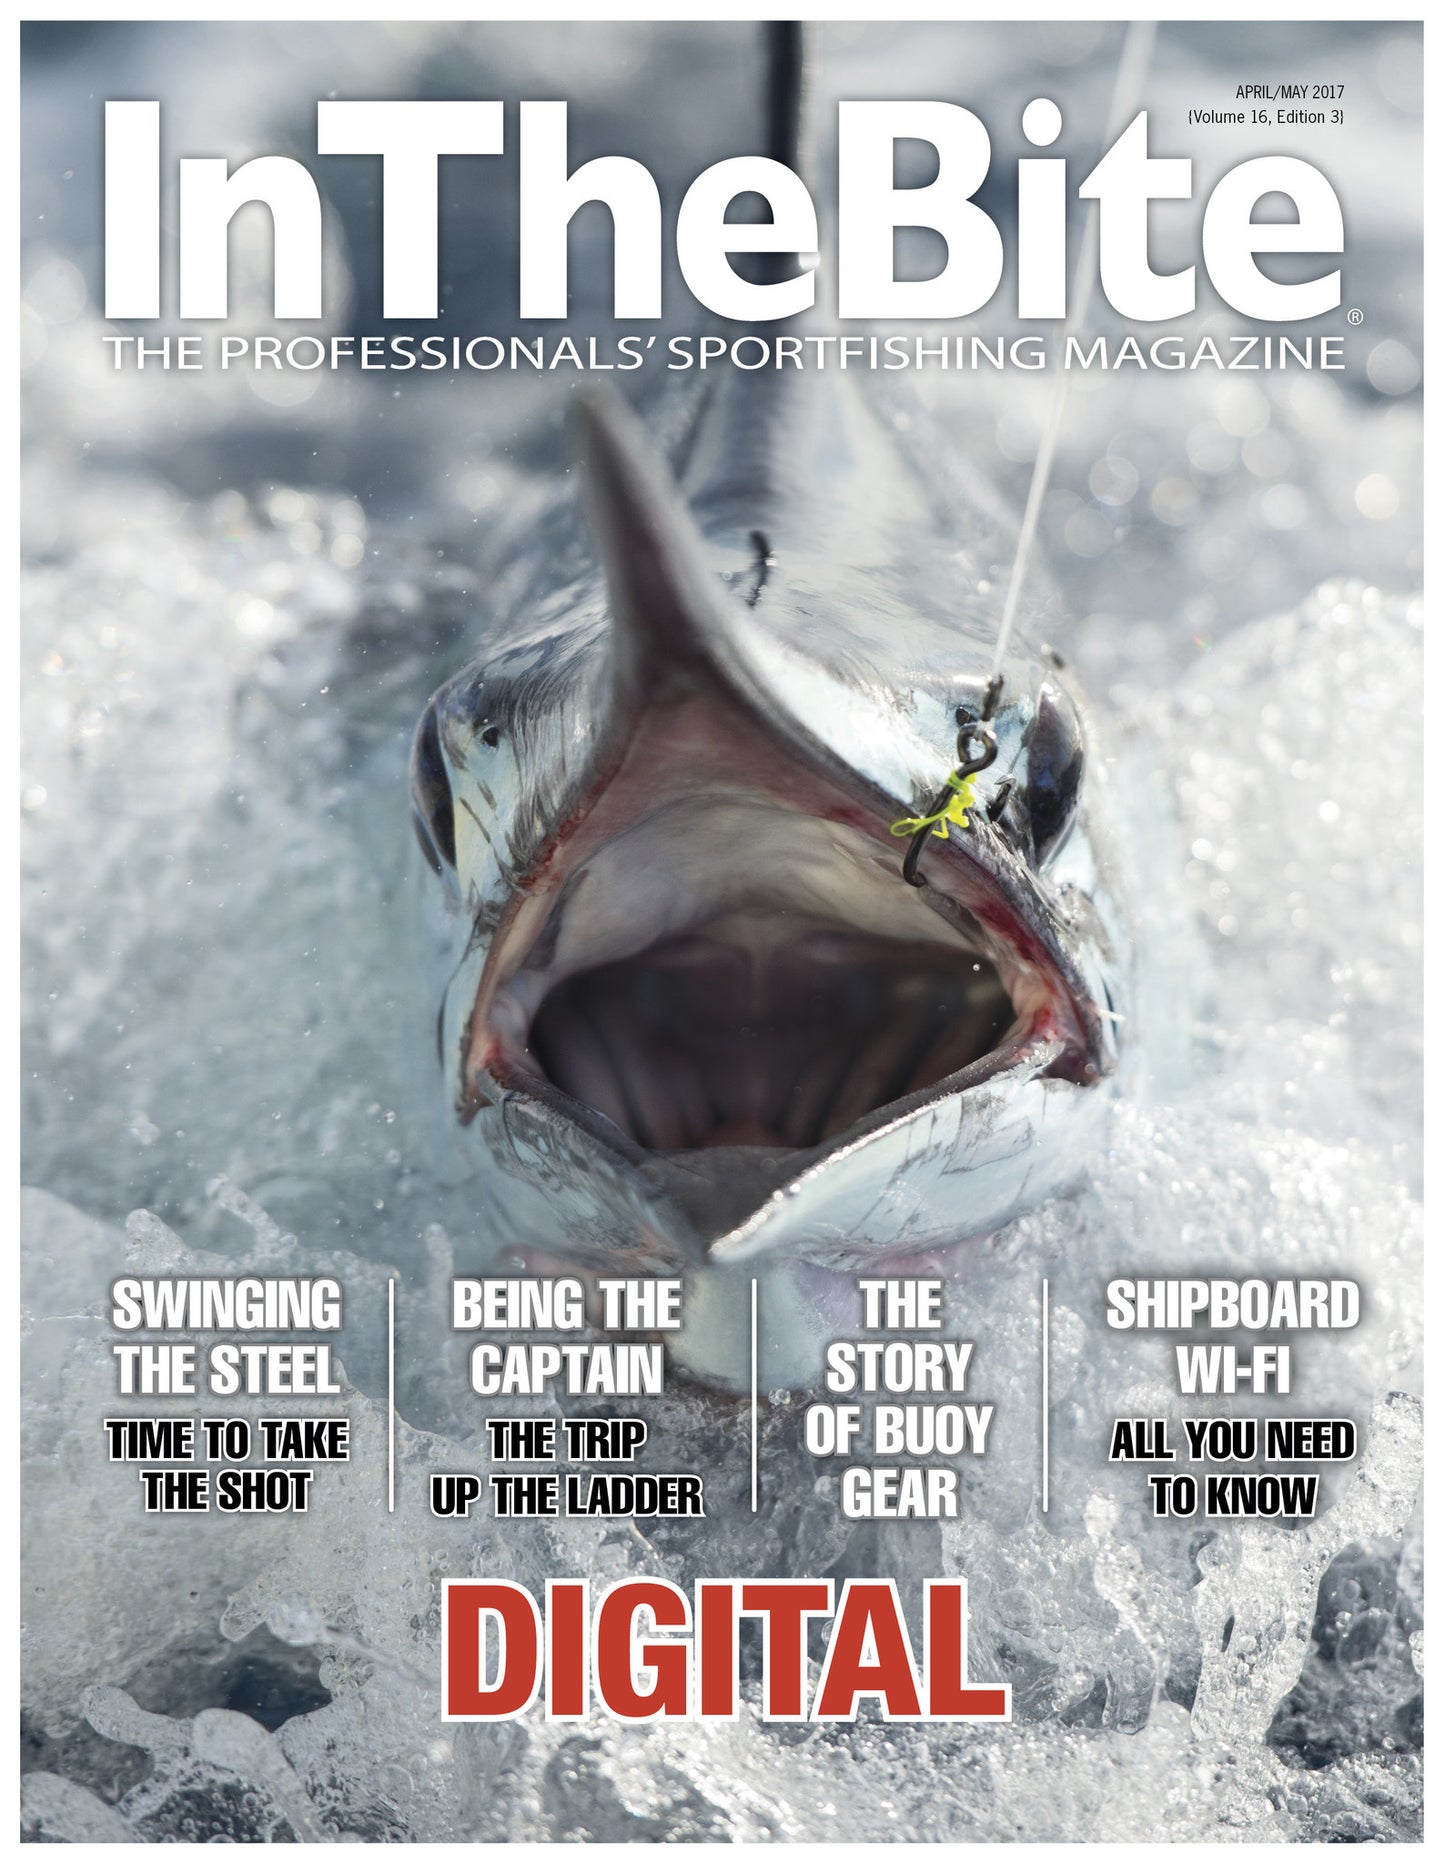 InTheBite Volume 16 Edition 03 - April/May 2017 - Digital Edition